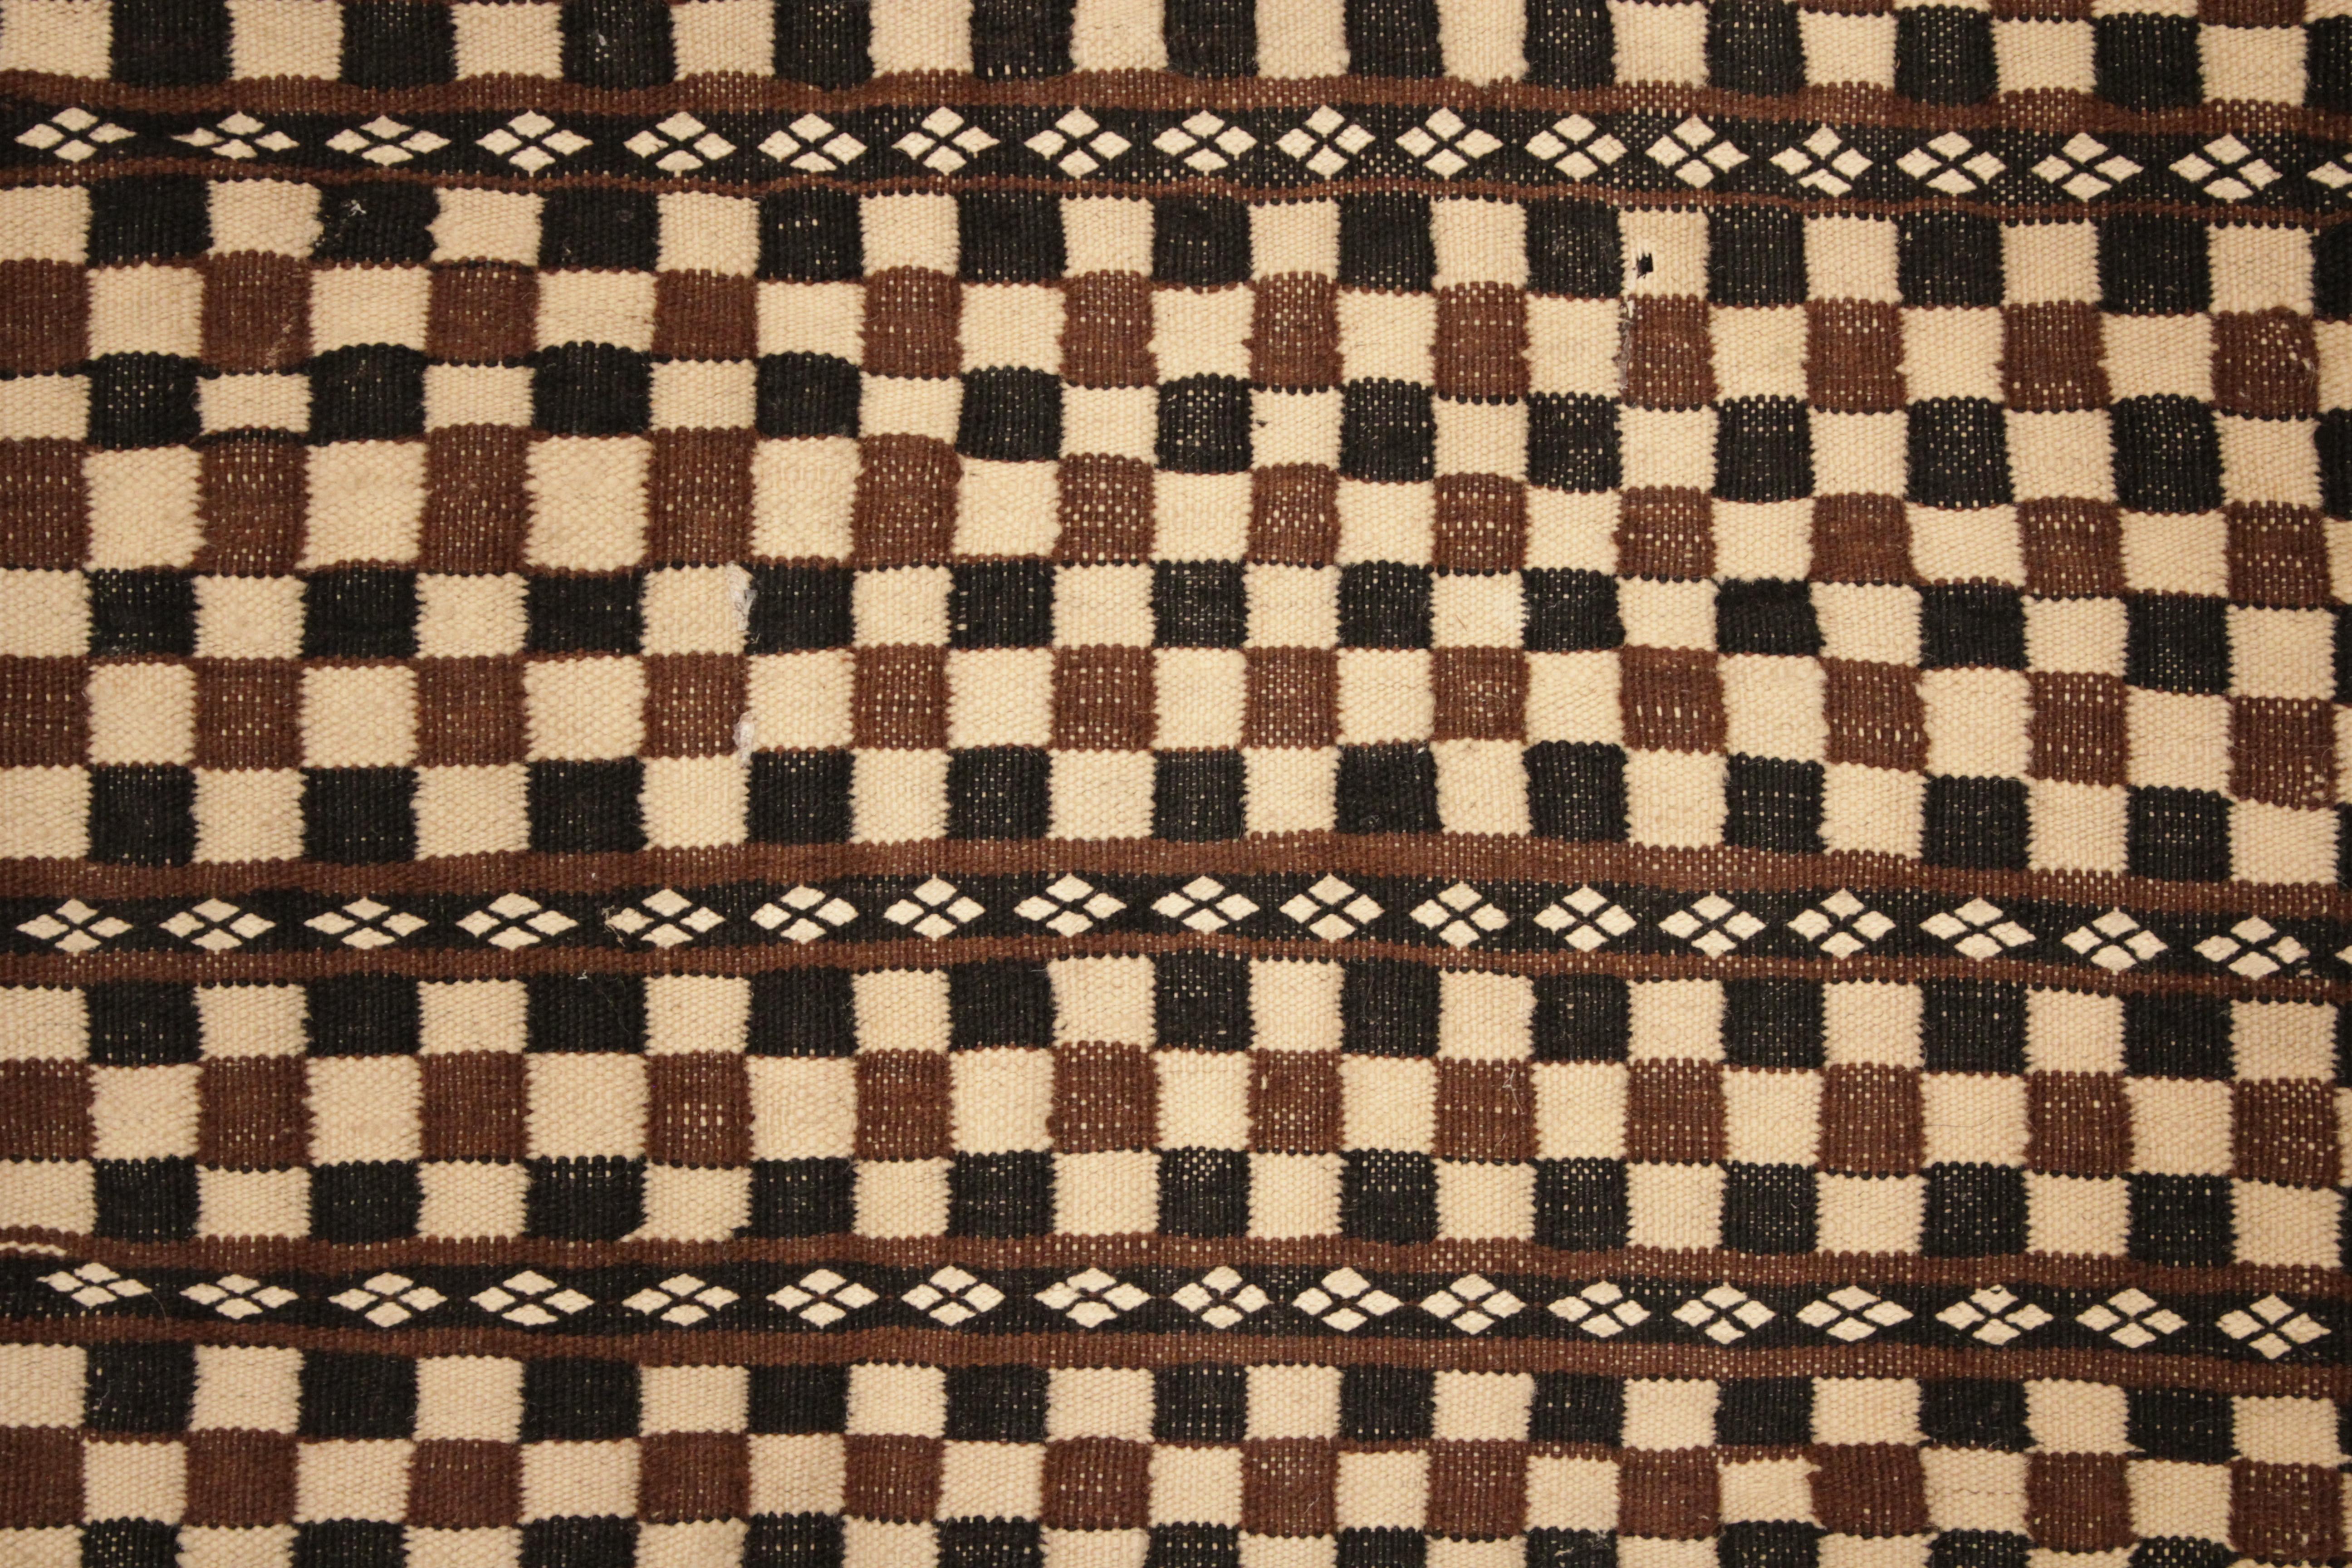 Hand-Woven Fine Antique Moroccan Berber Checkerboard Design Flat-Woven Rug in Earth Tones  For Sale